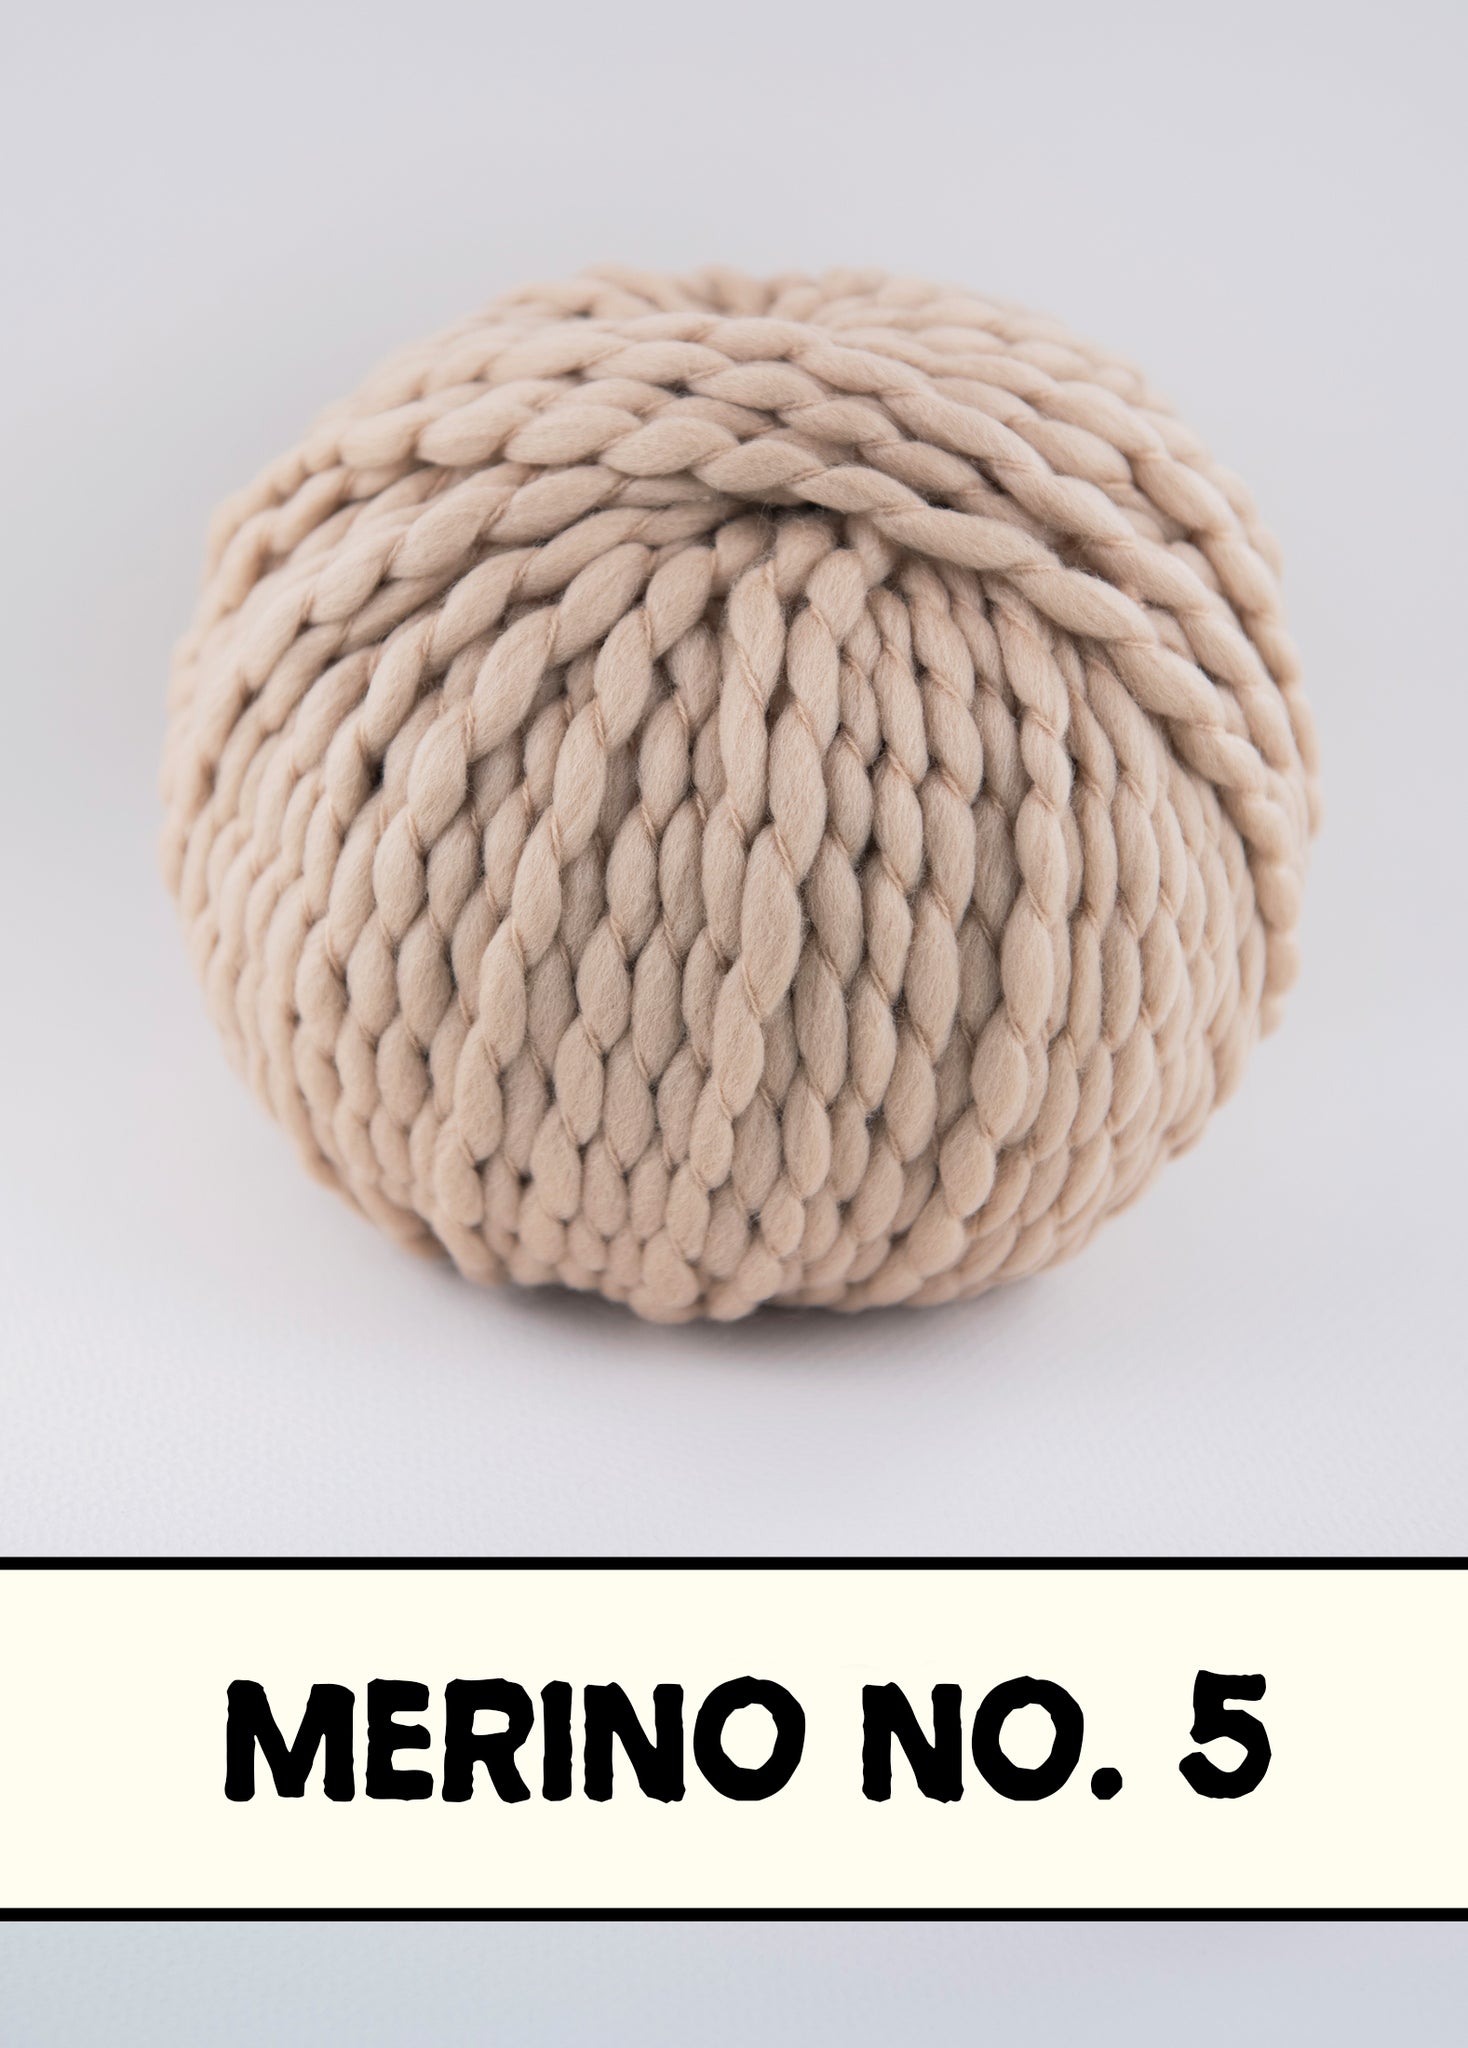 Wool vs. Merino Wool